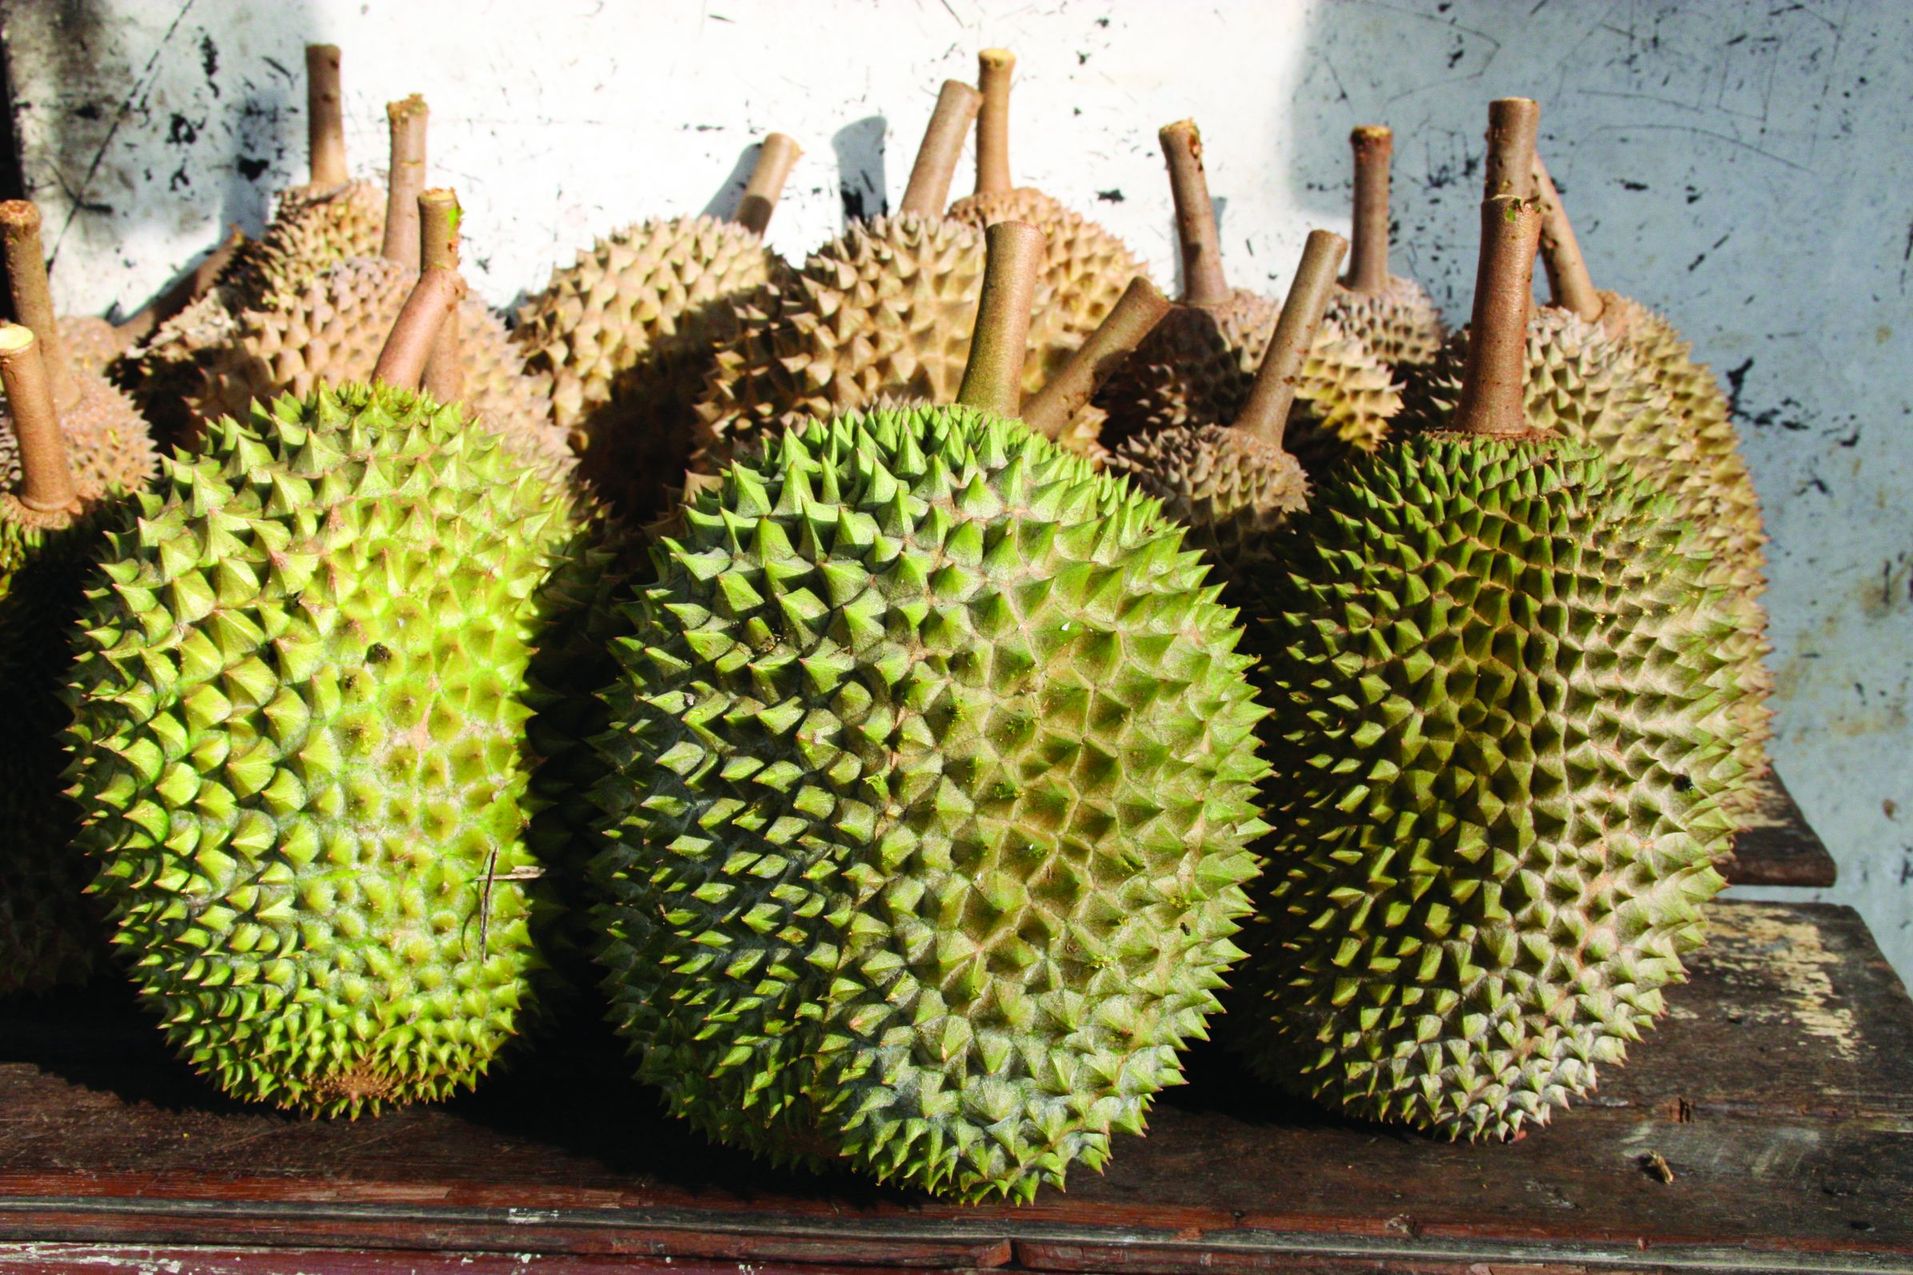 Negara Jiran Merebut Peluang Perniagaan Durian - Agrimag